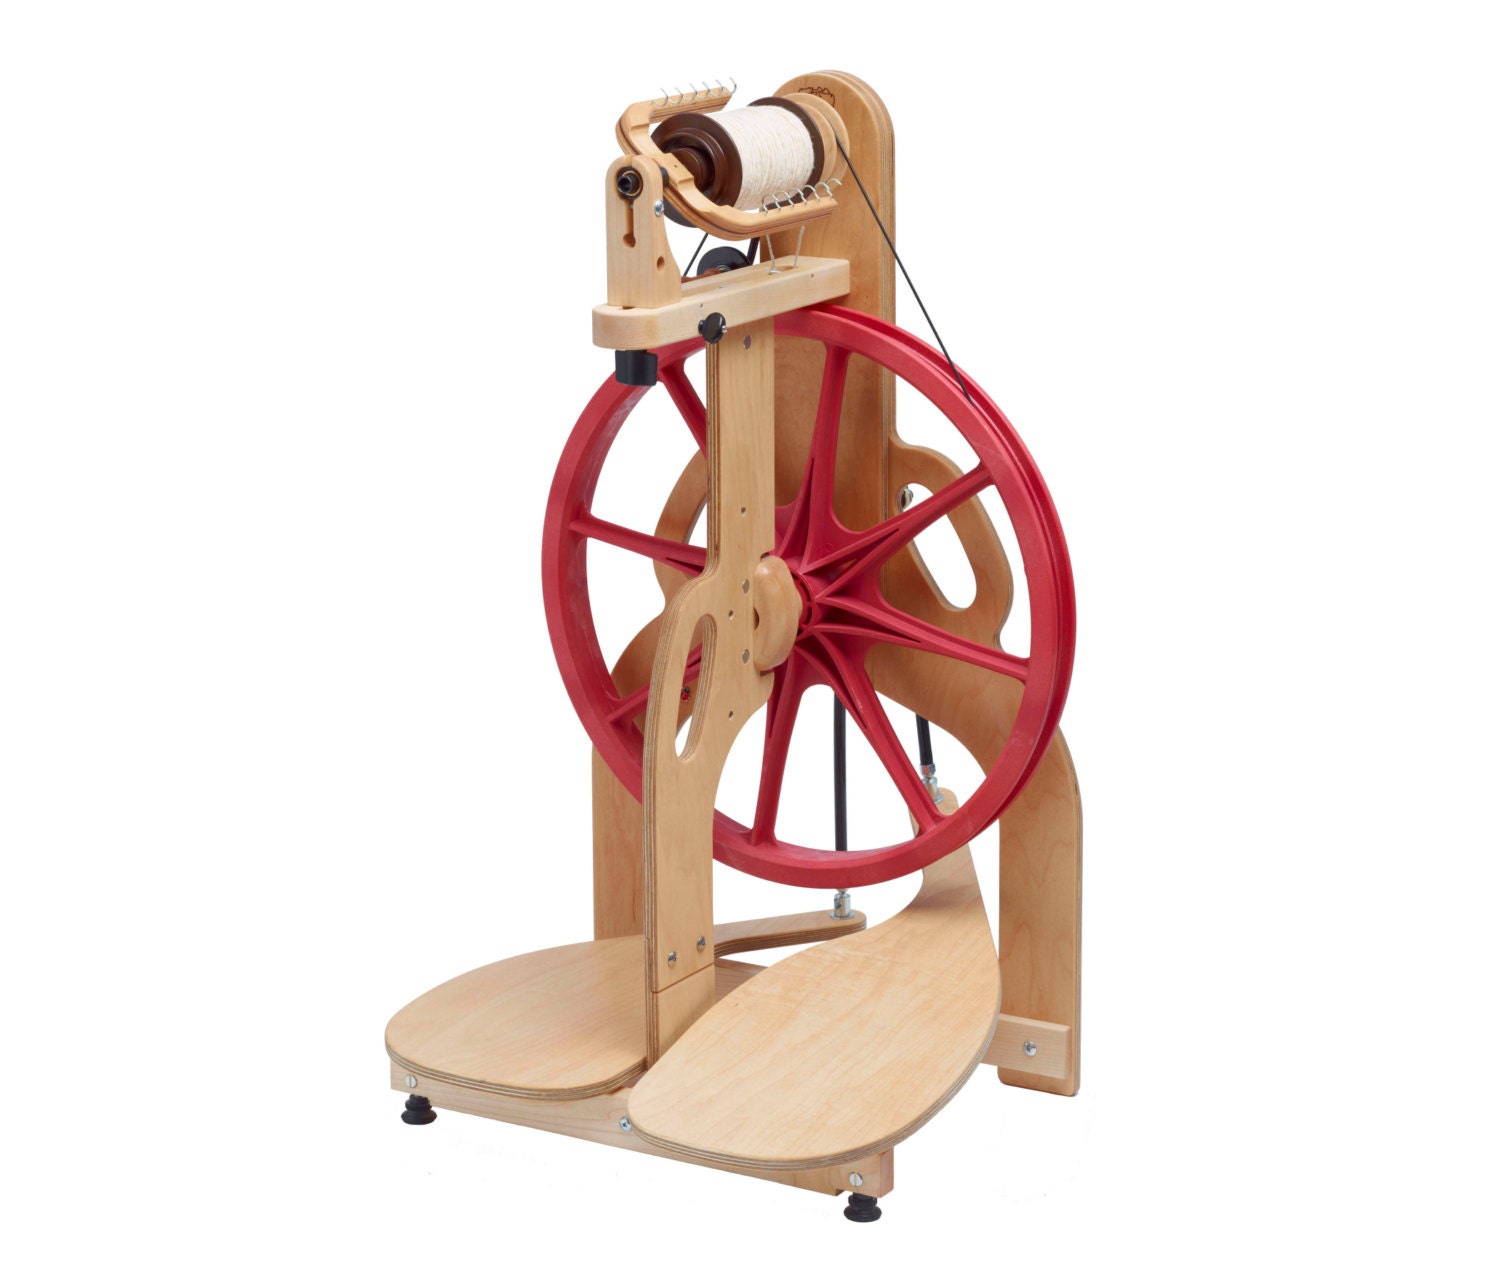 Handcrafted Wooden Spinning Wheel - Fiber Art Tool Traditional